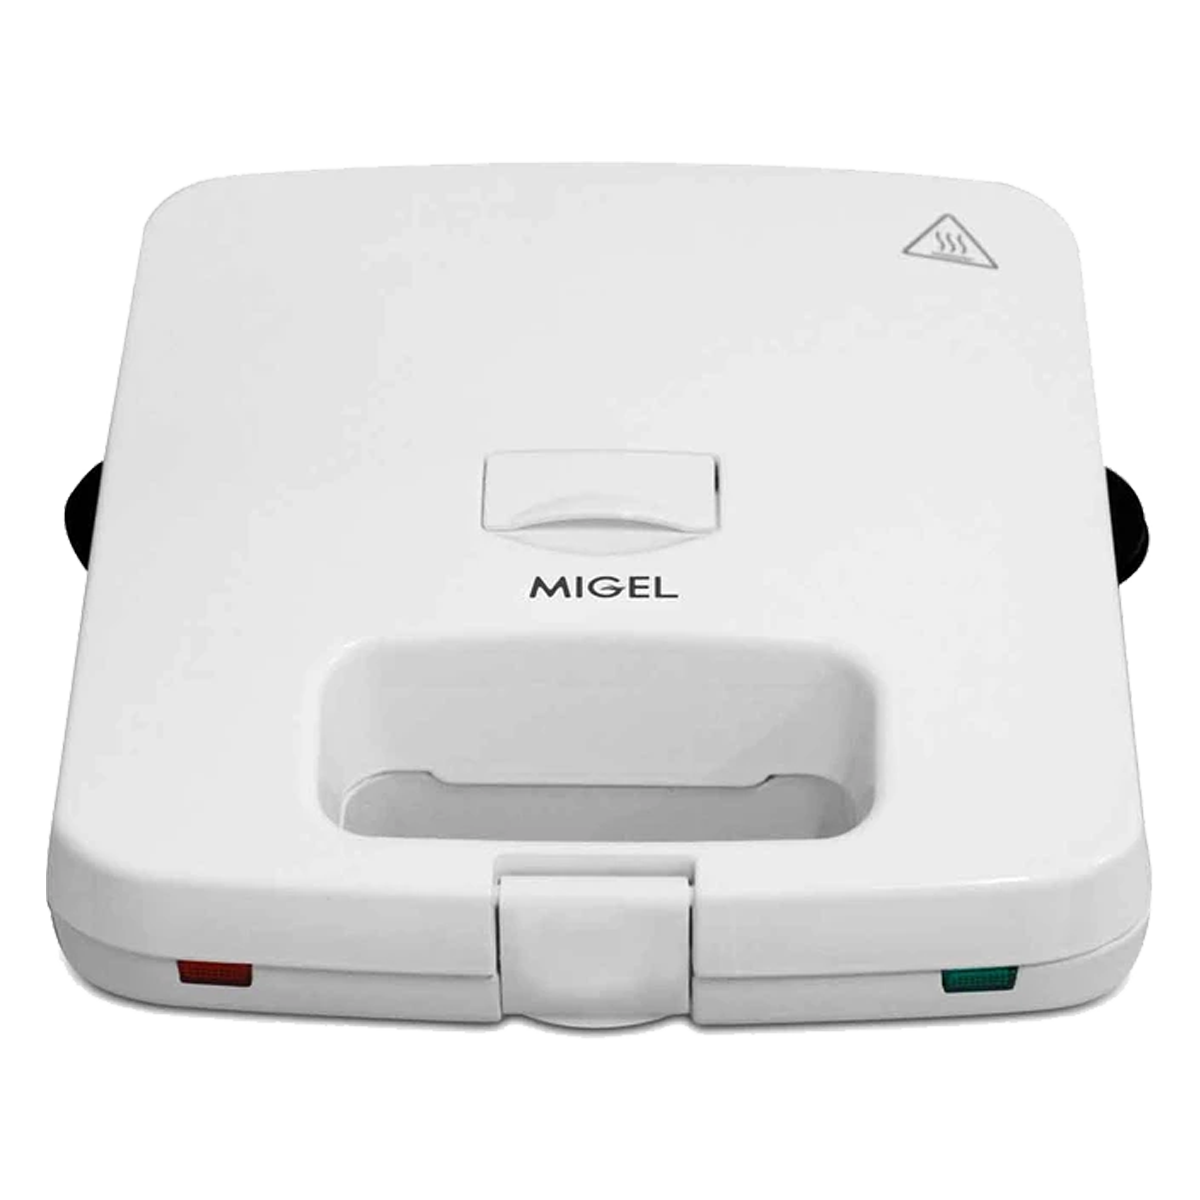  ساندویچ ساز میگل مدل GSM 200